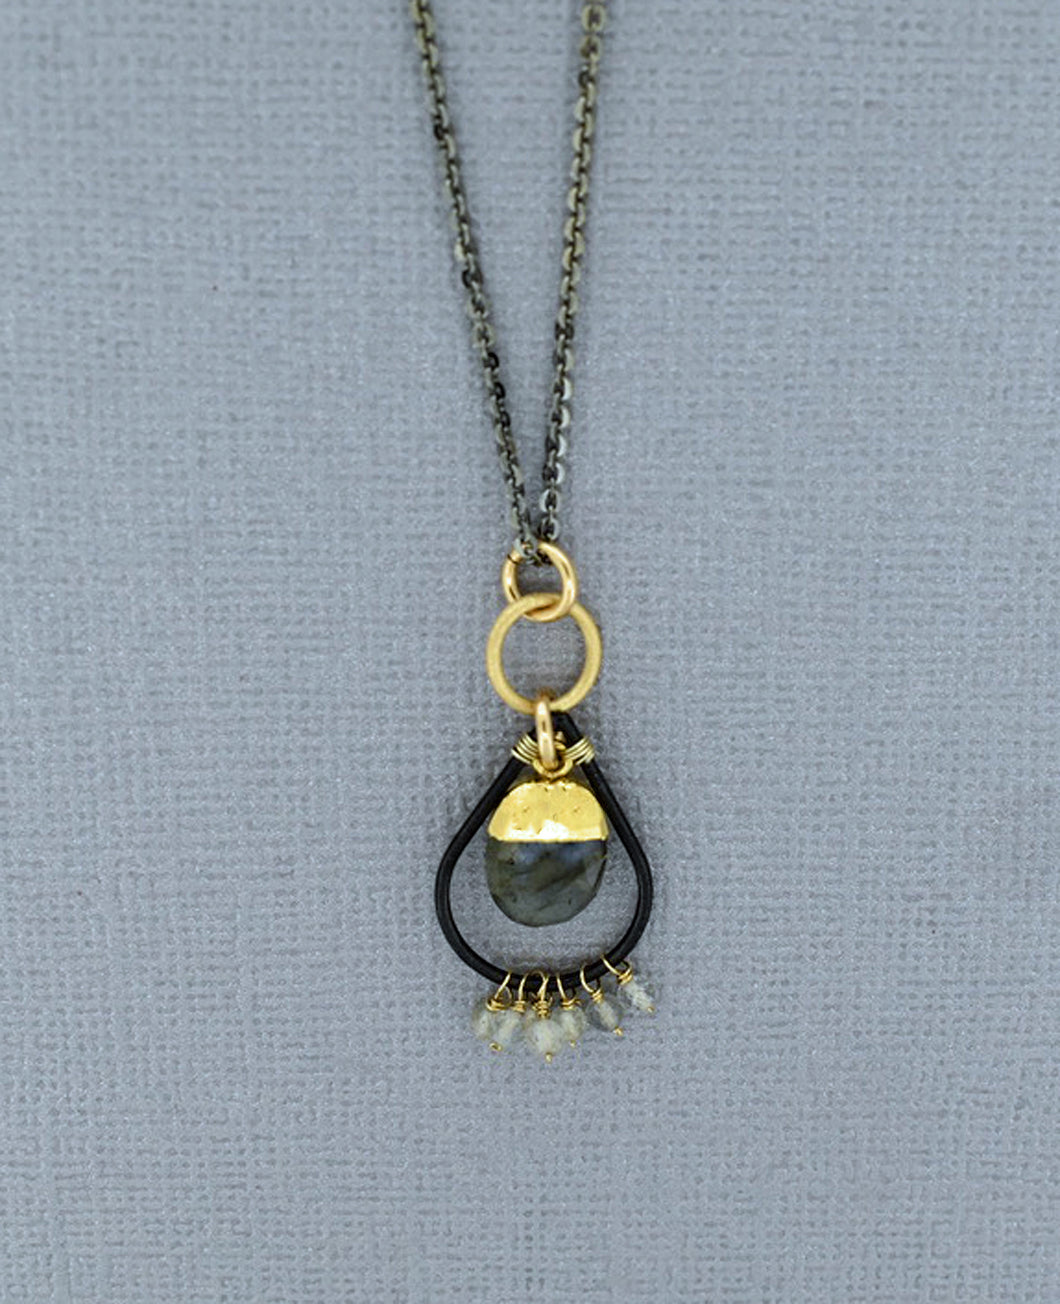 Labradorite Necklace with Oxidized Chain